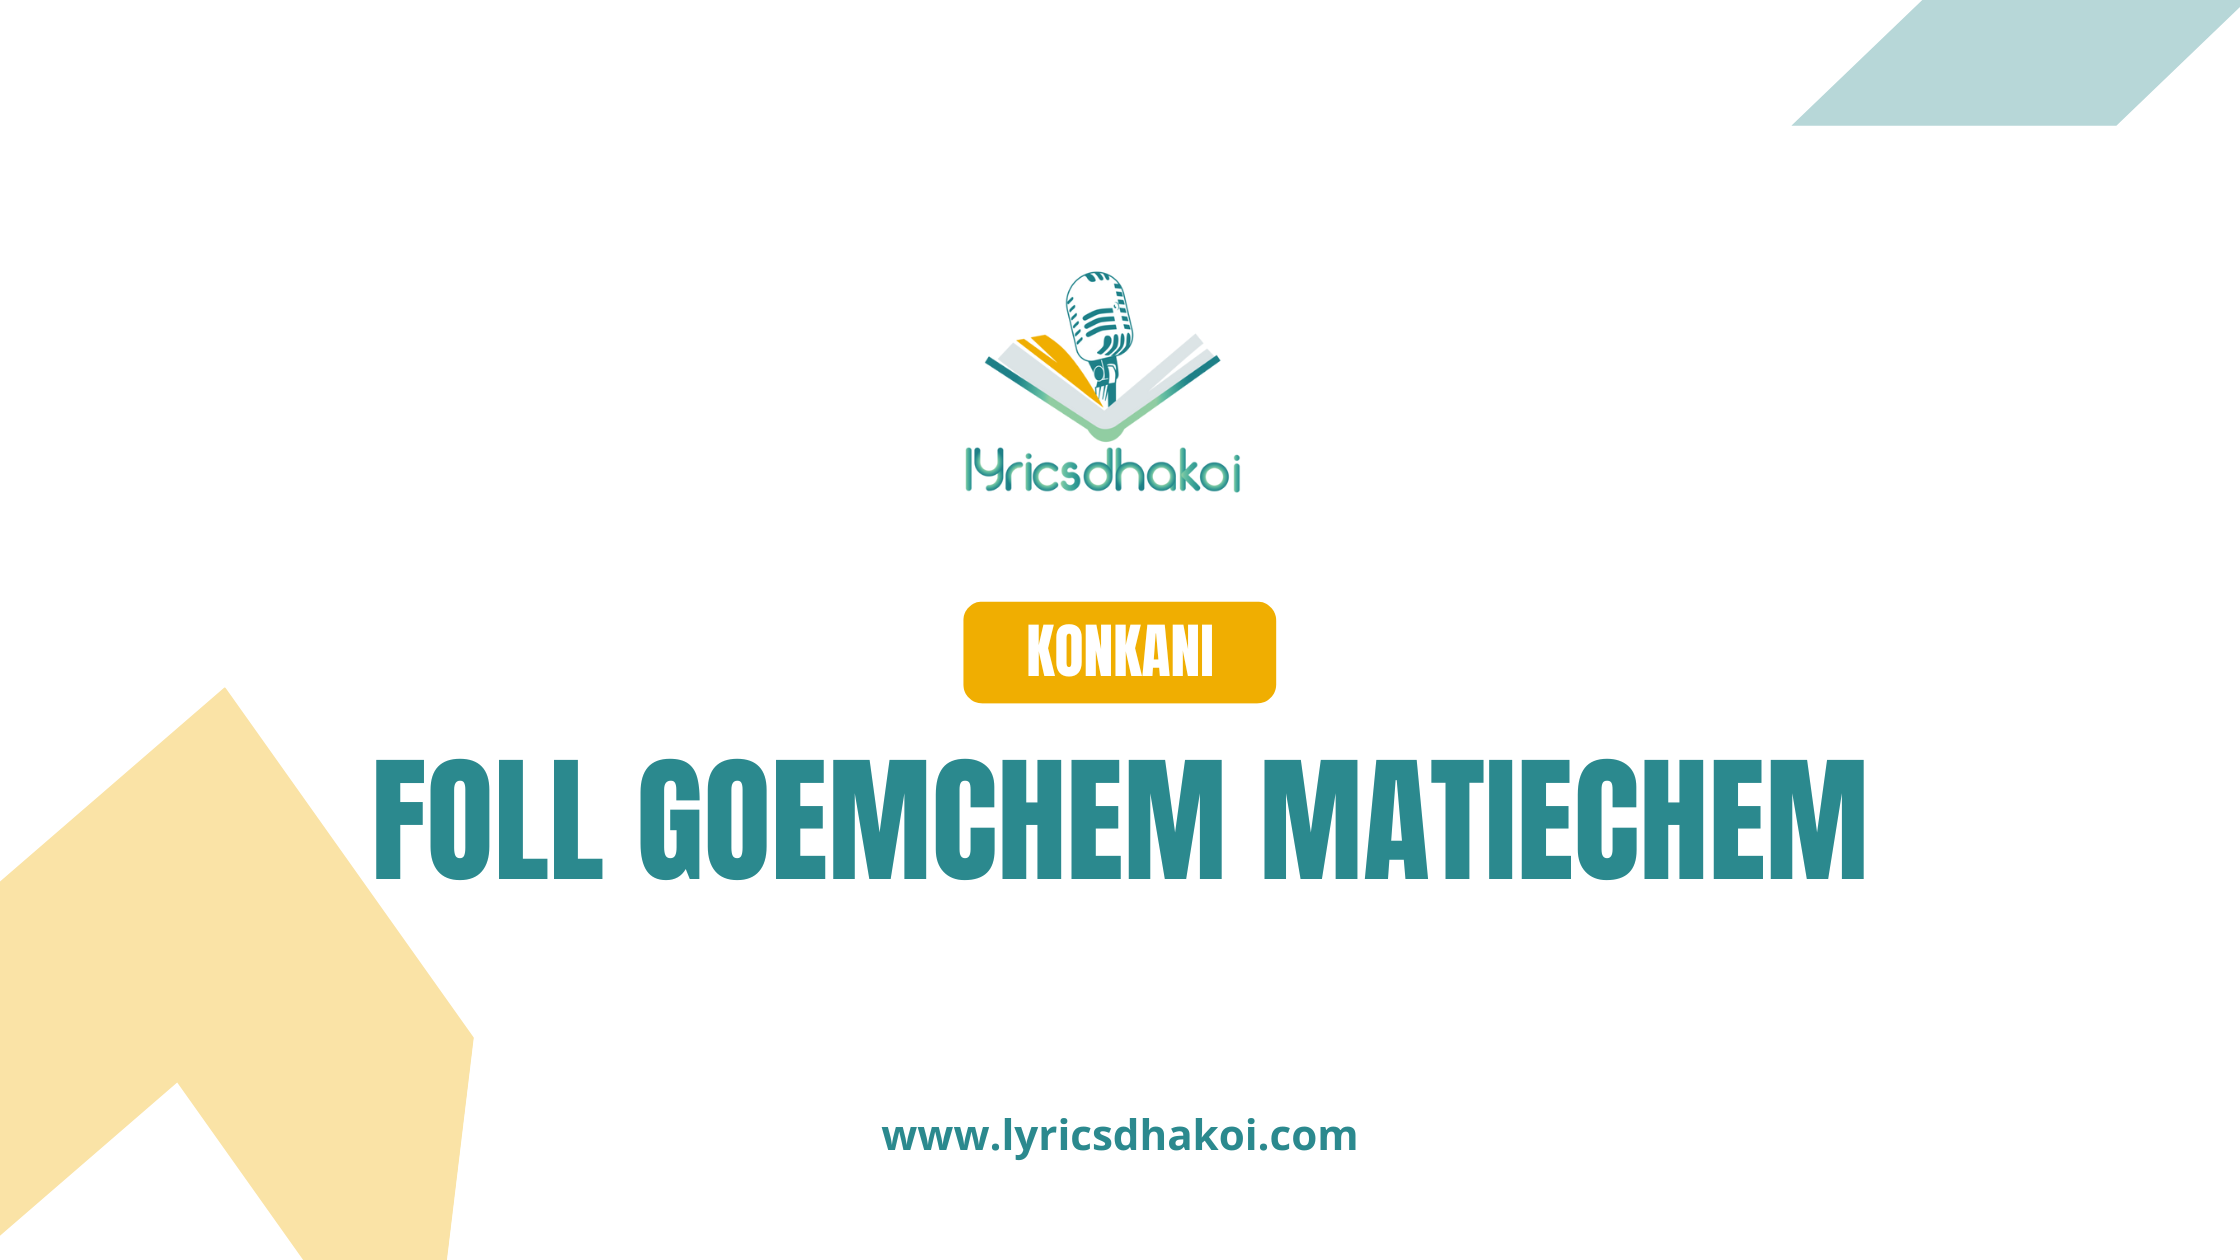 Foll Goemchem Matiechem Konkani Lyrics for Karaoke Online - LyricsDhakoi.com